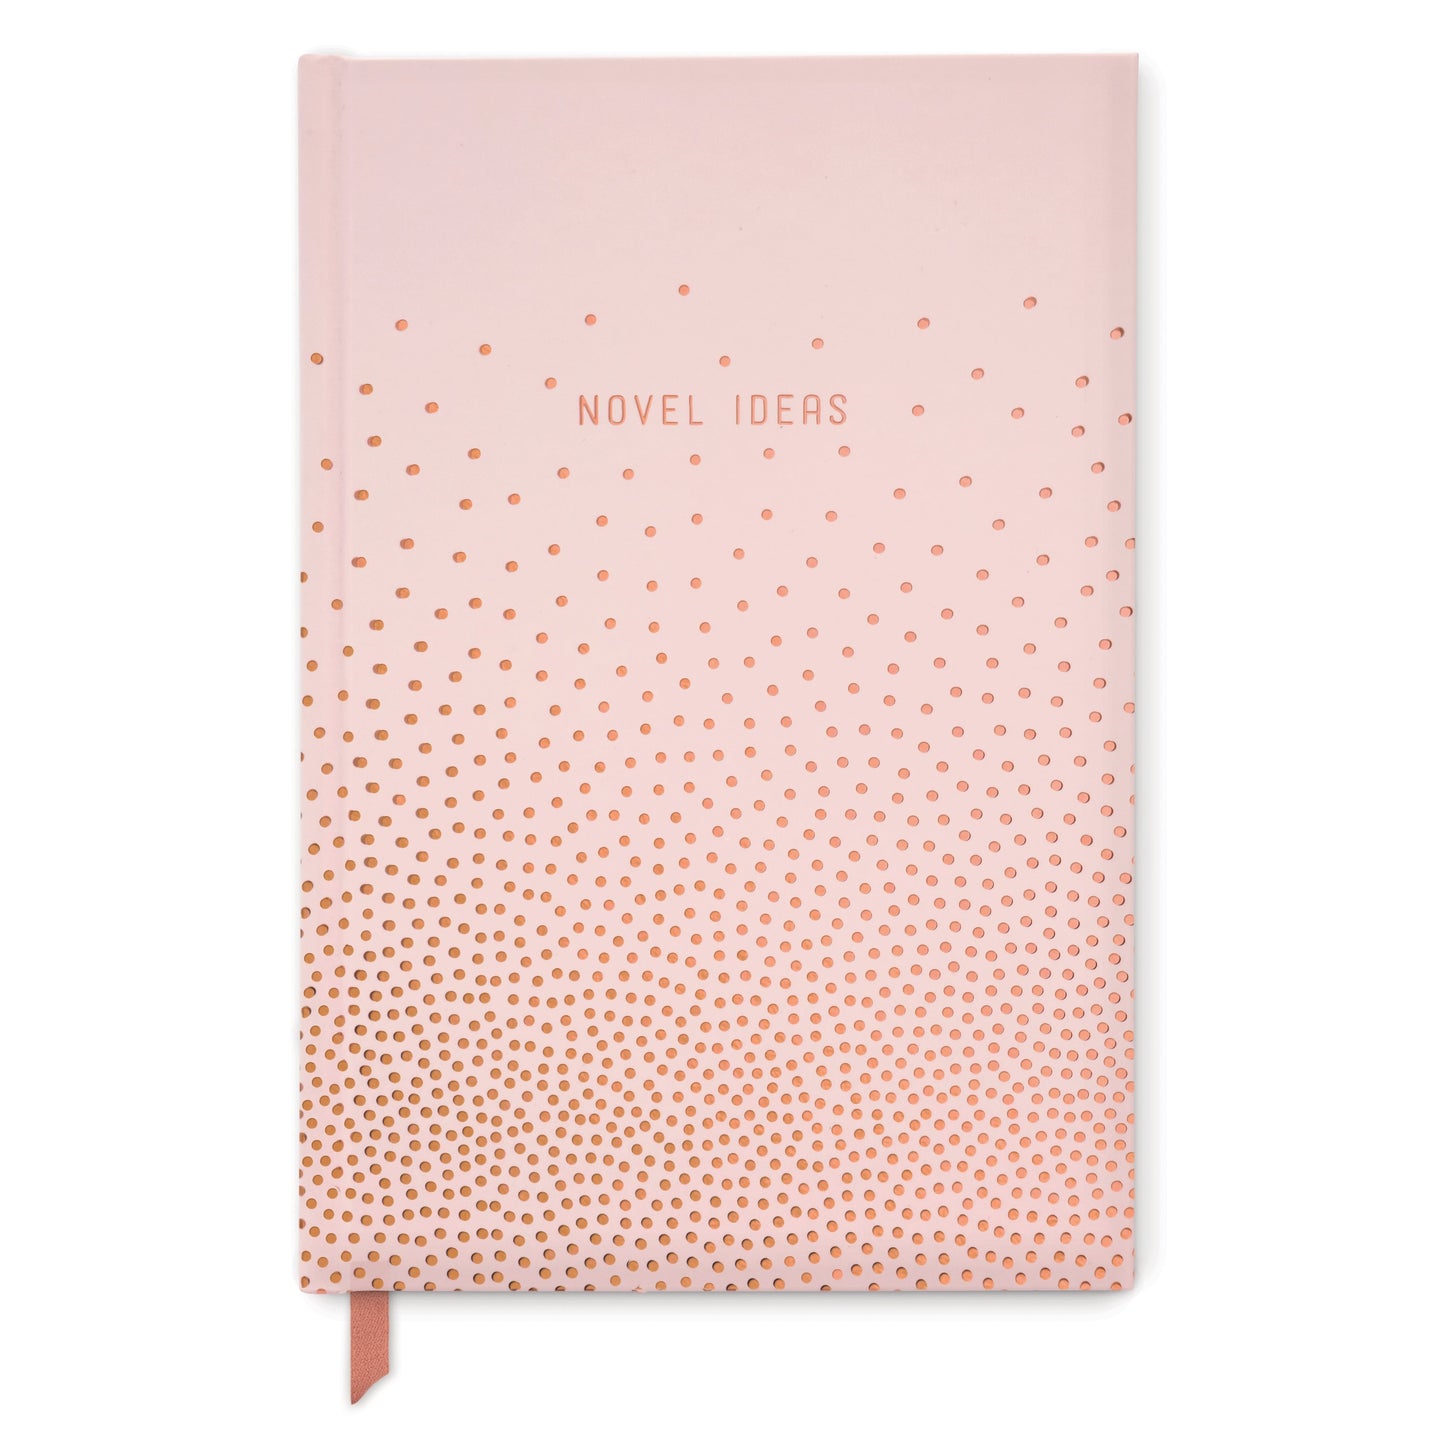 Hard Cover Journal - Copper Dots "Novel Ideas"